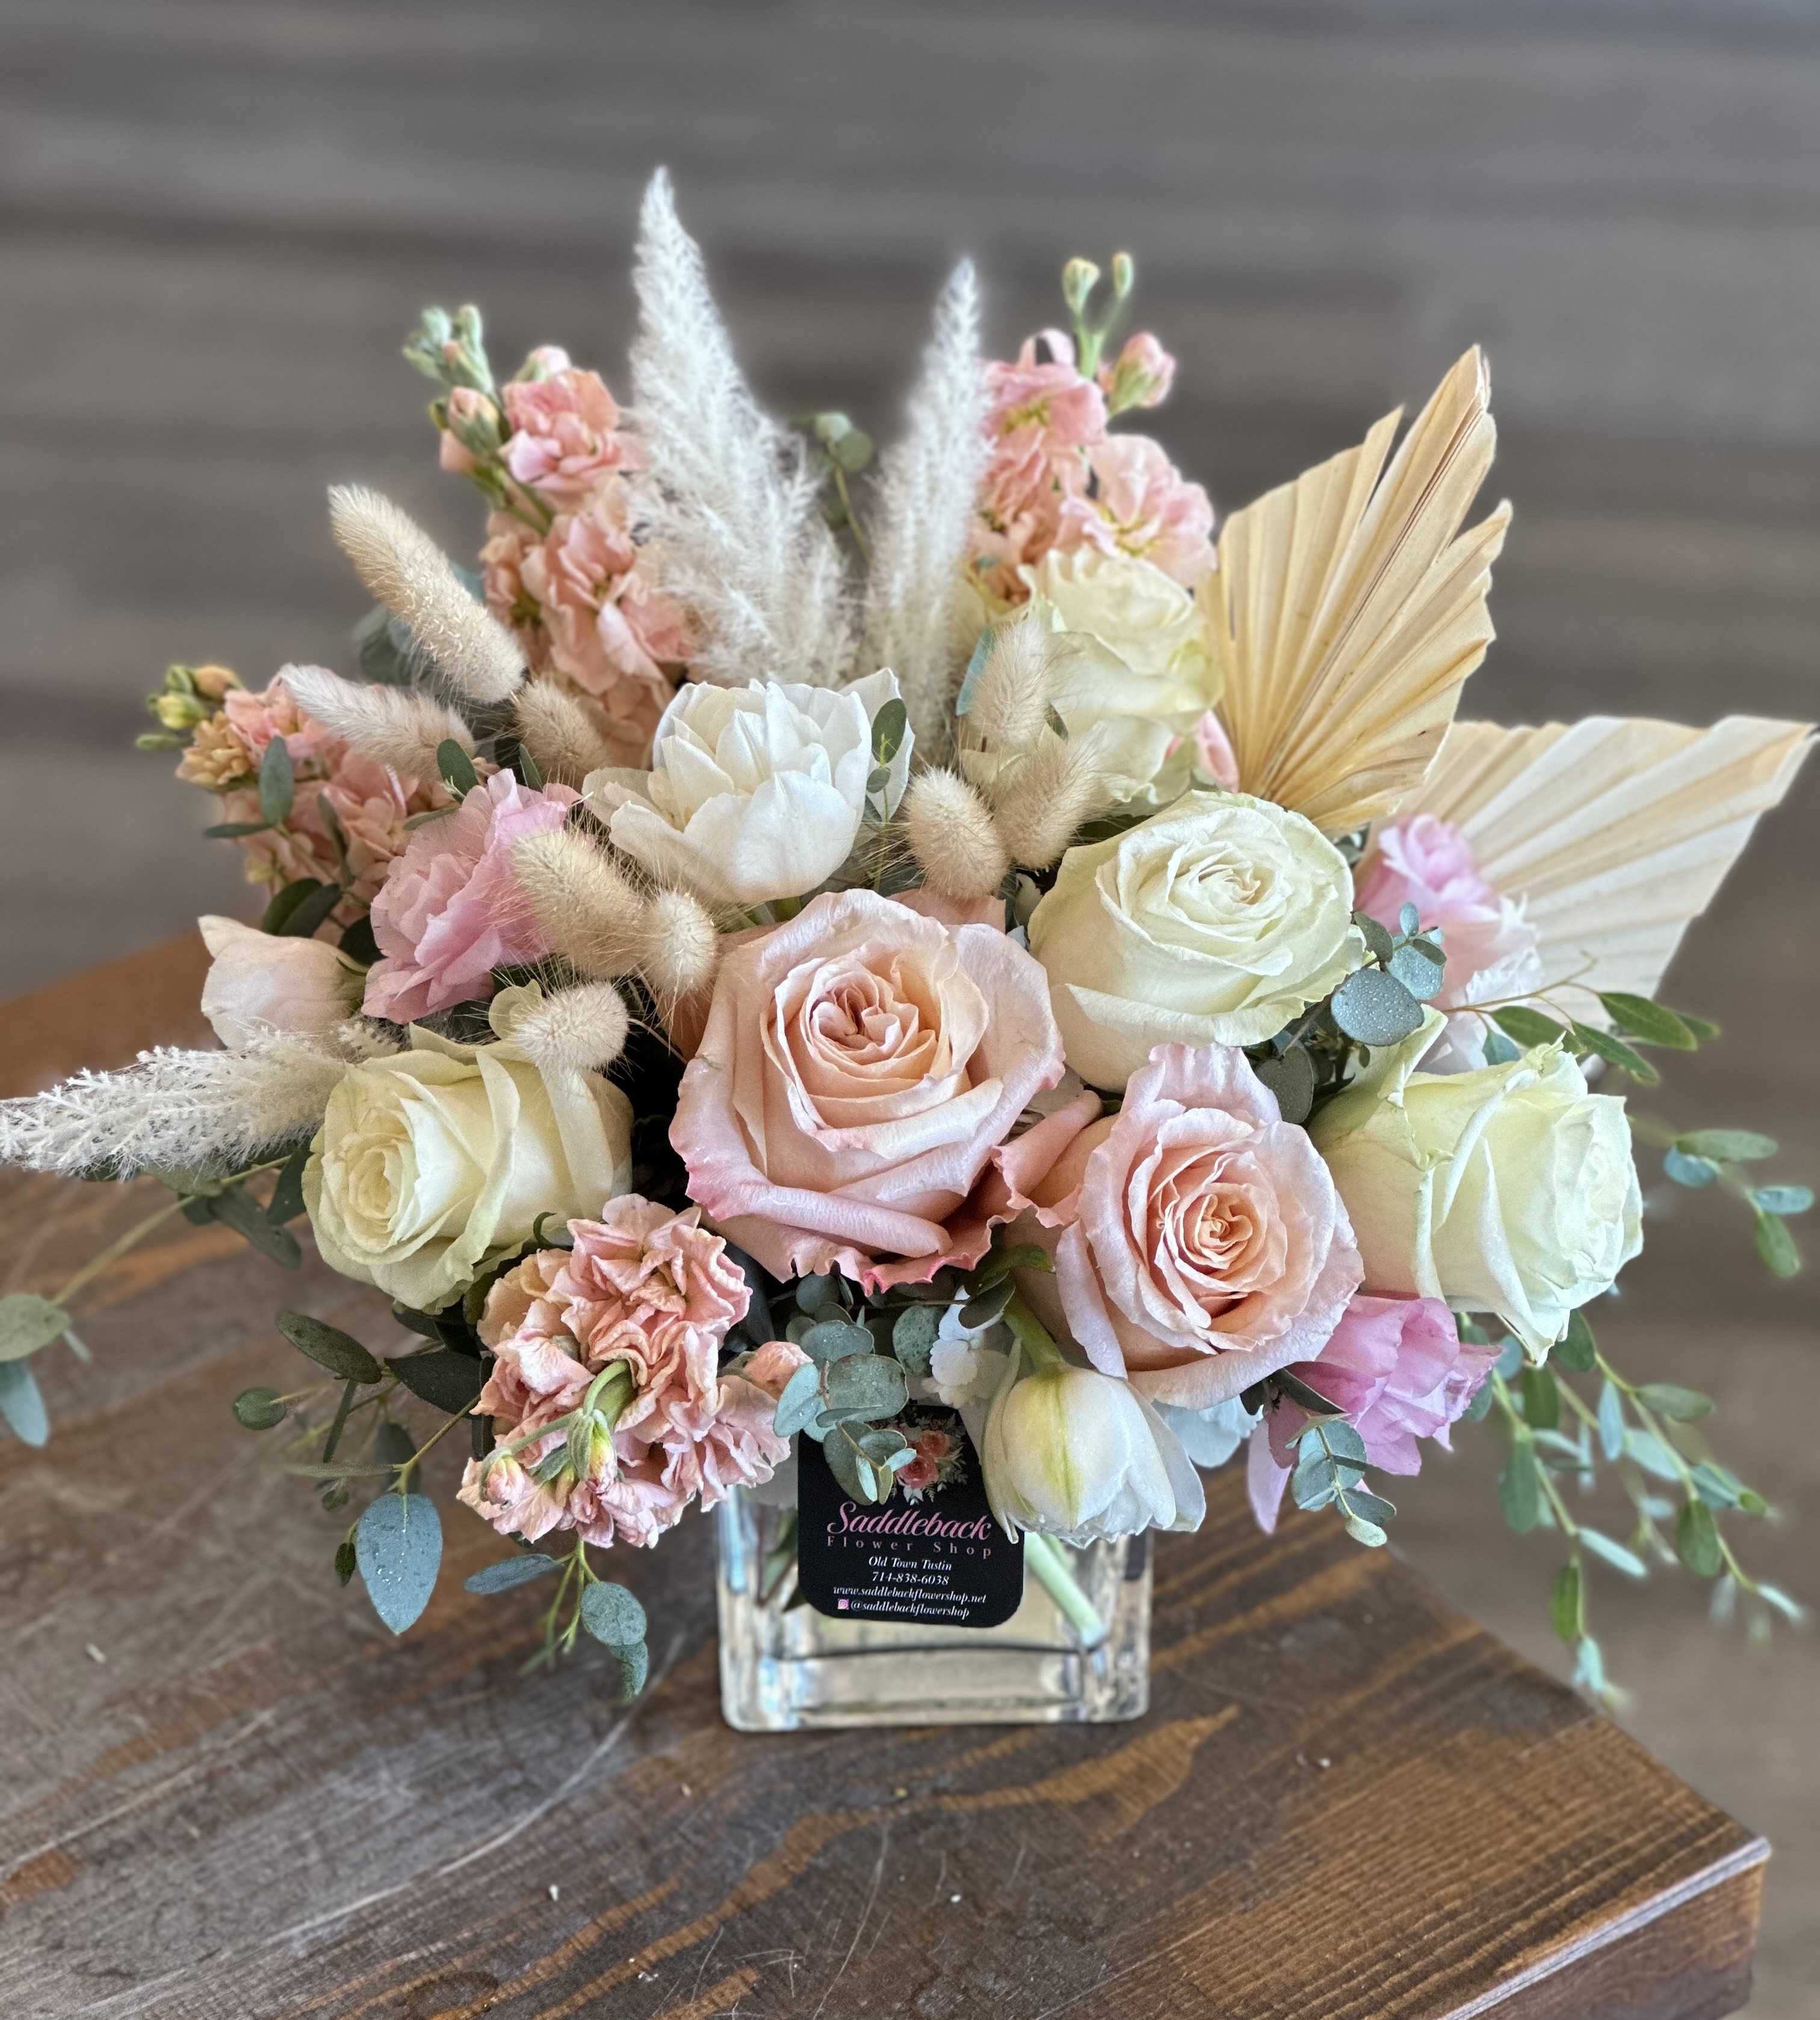 Saddleback Flower Shop - Florists Tustin California - Flowers Tustin 92780